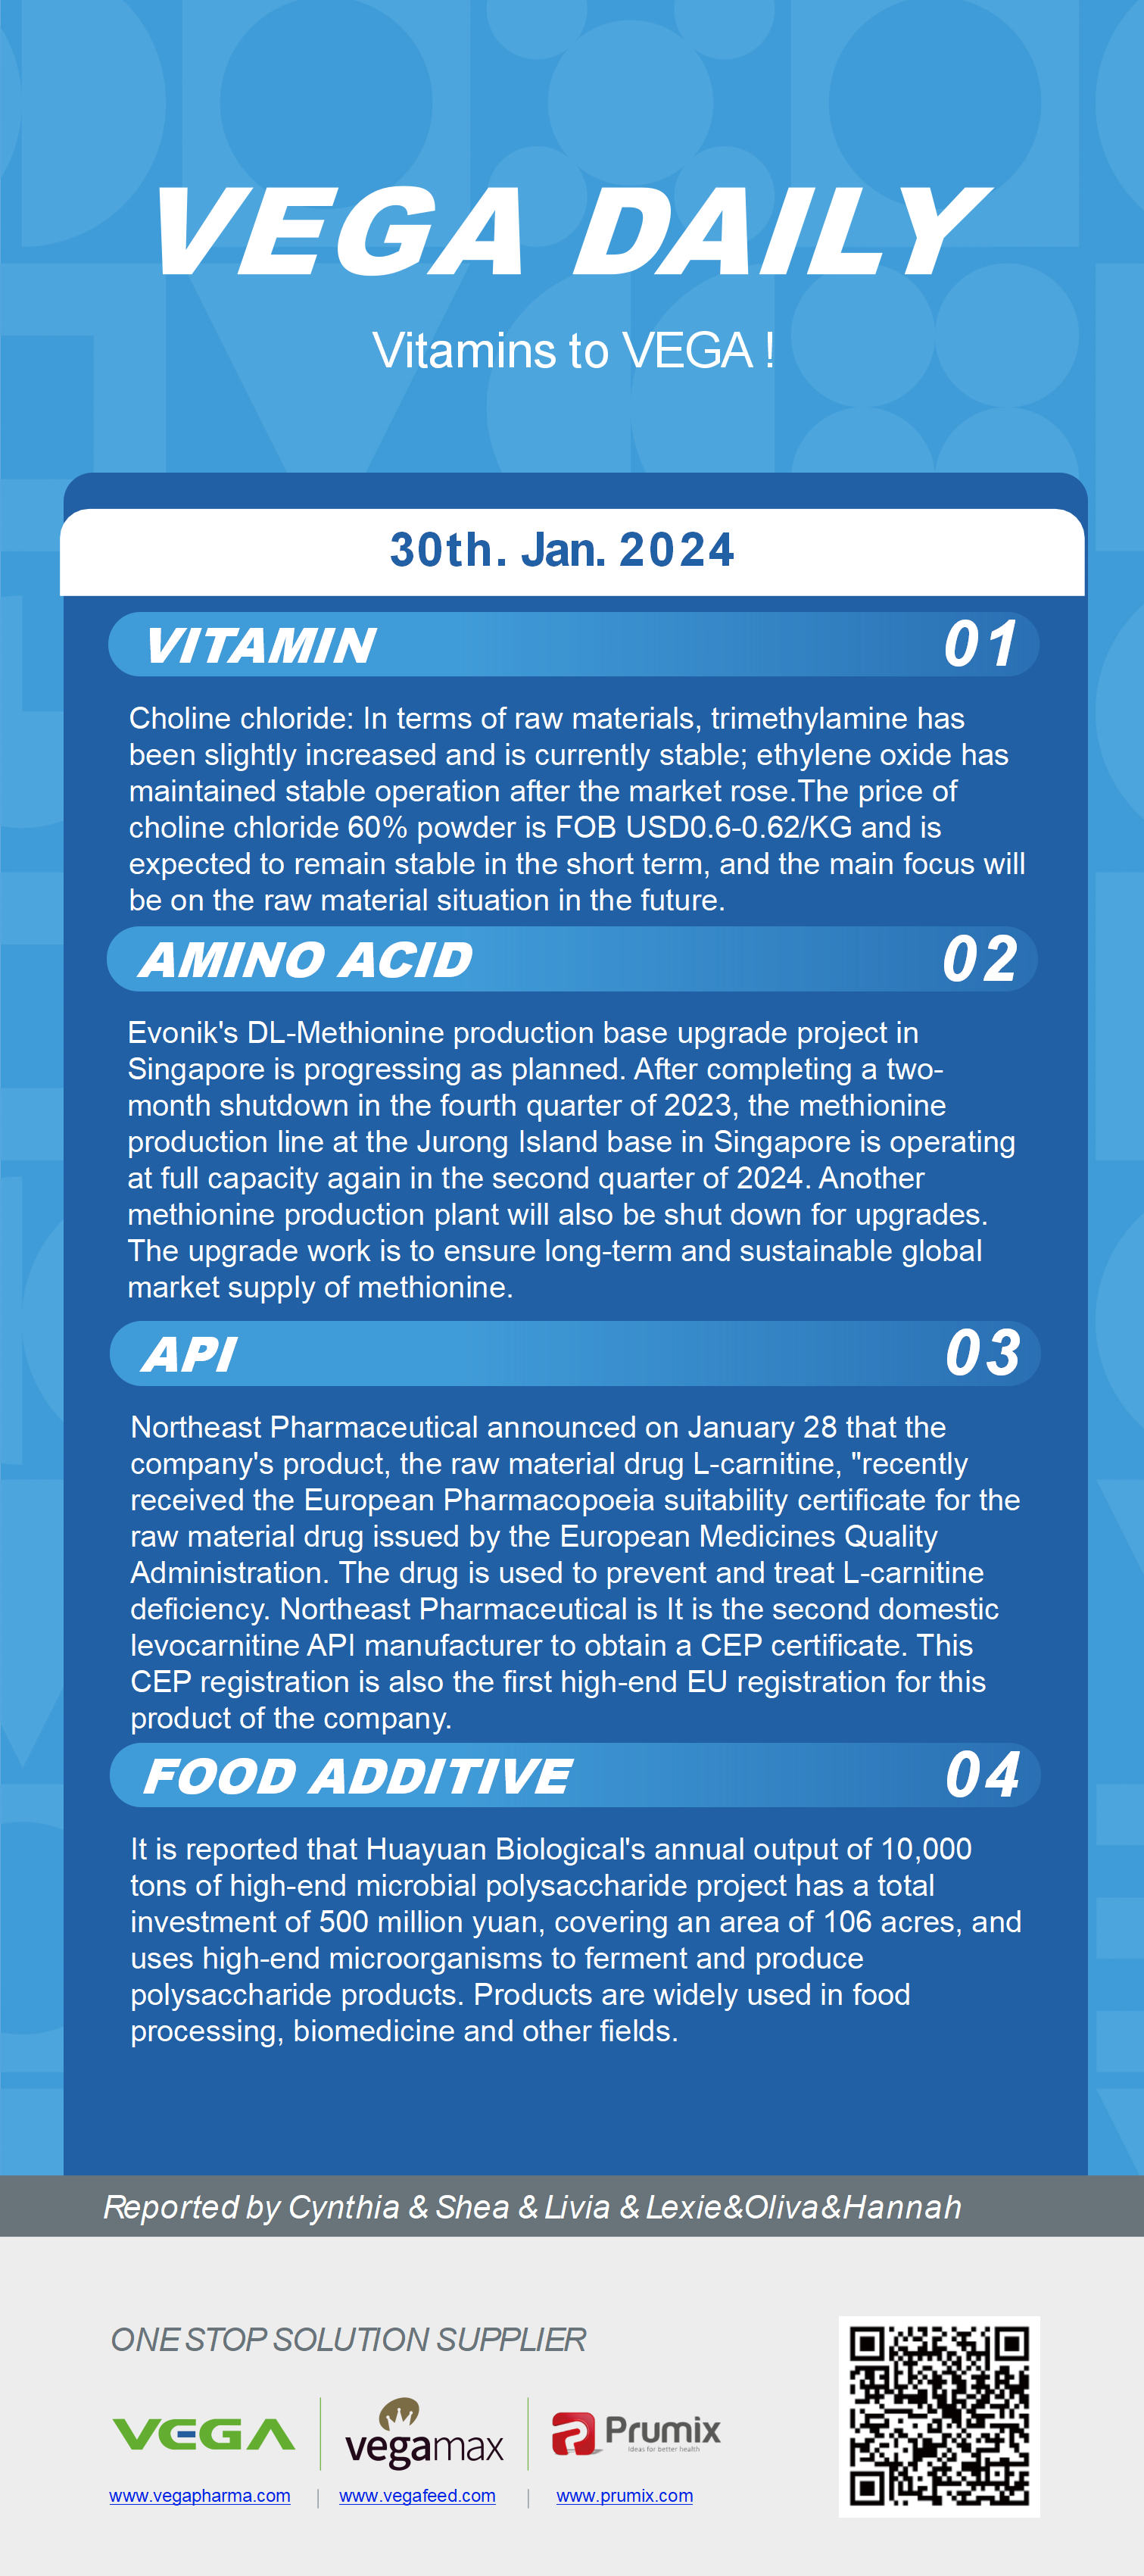 Vega Daily Dated on Jan 30th 2024 Vitamin Amino Acid APl Food Additives.png